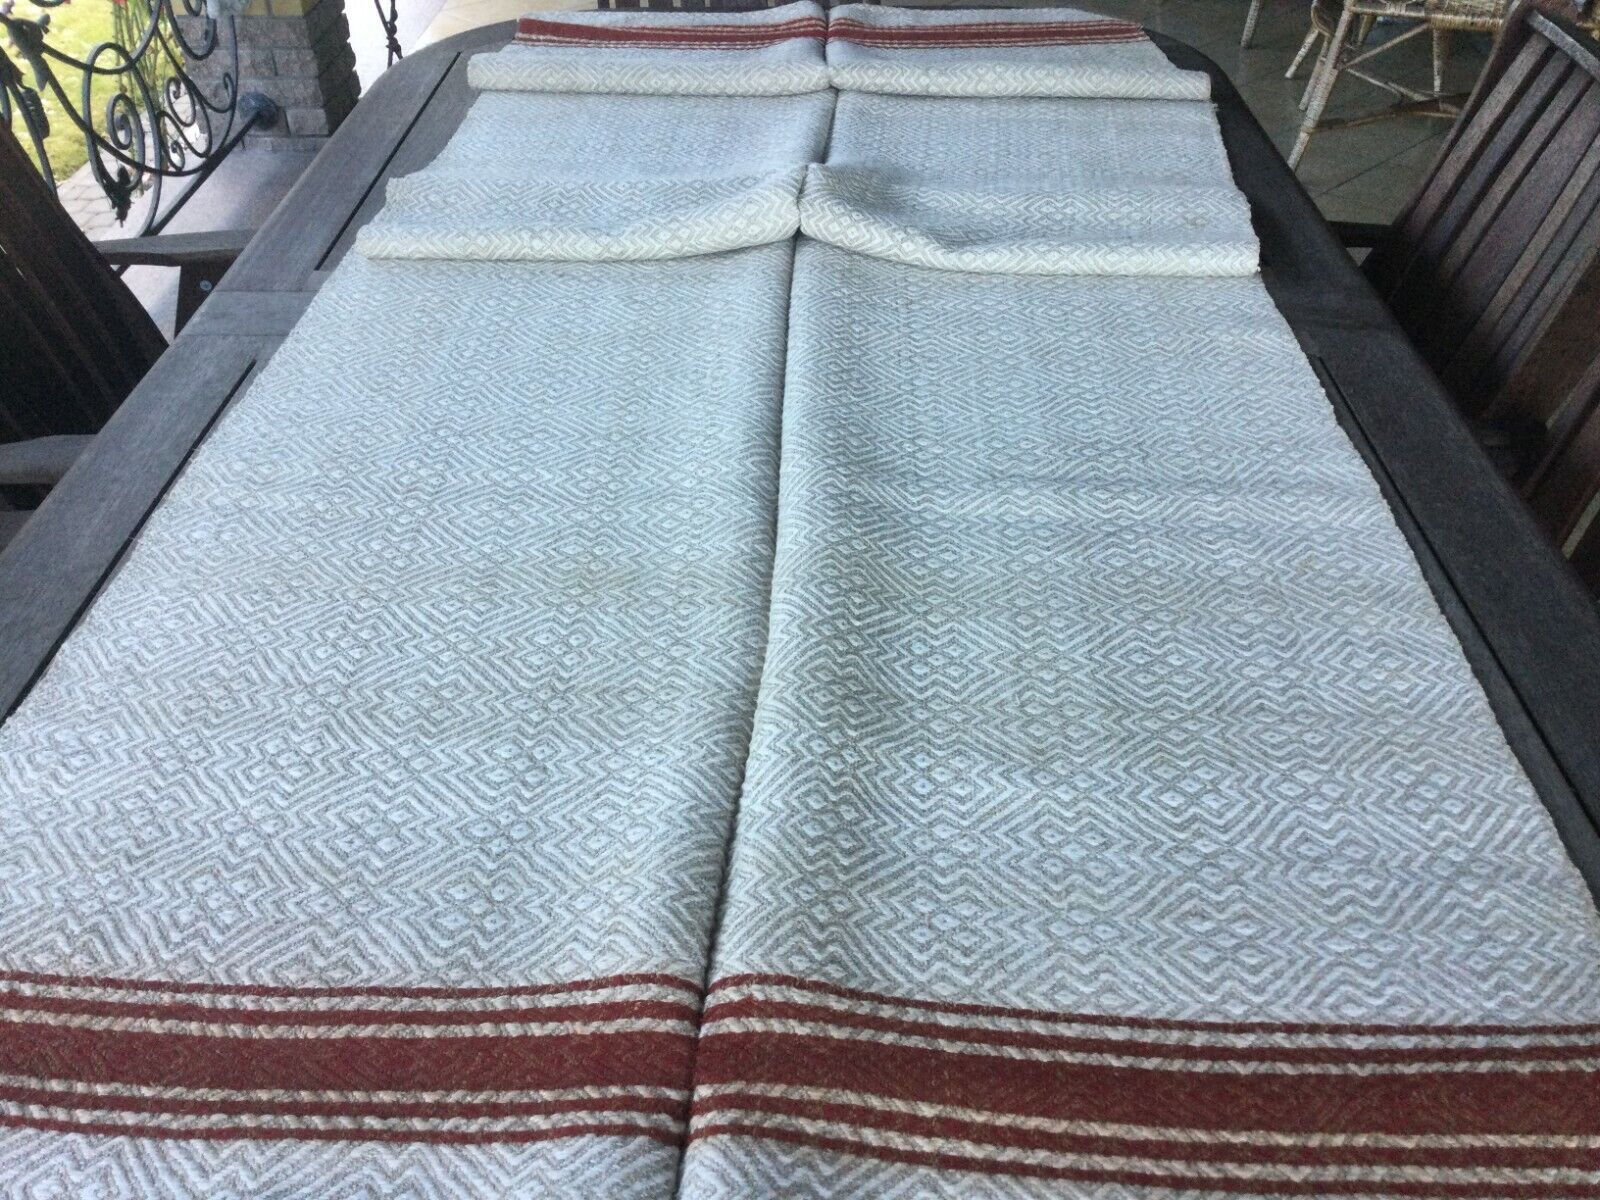 Hand Woven Hemp Linen Fabric Homespun European Textile Antique Rustic Primitive